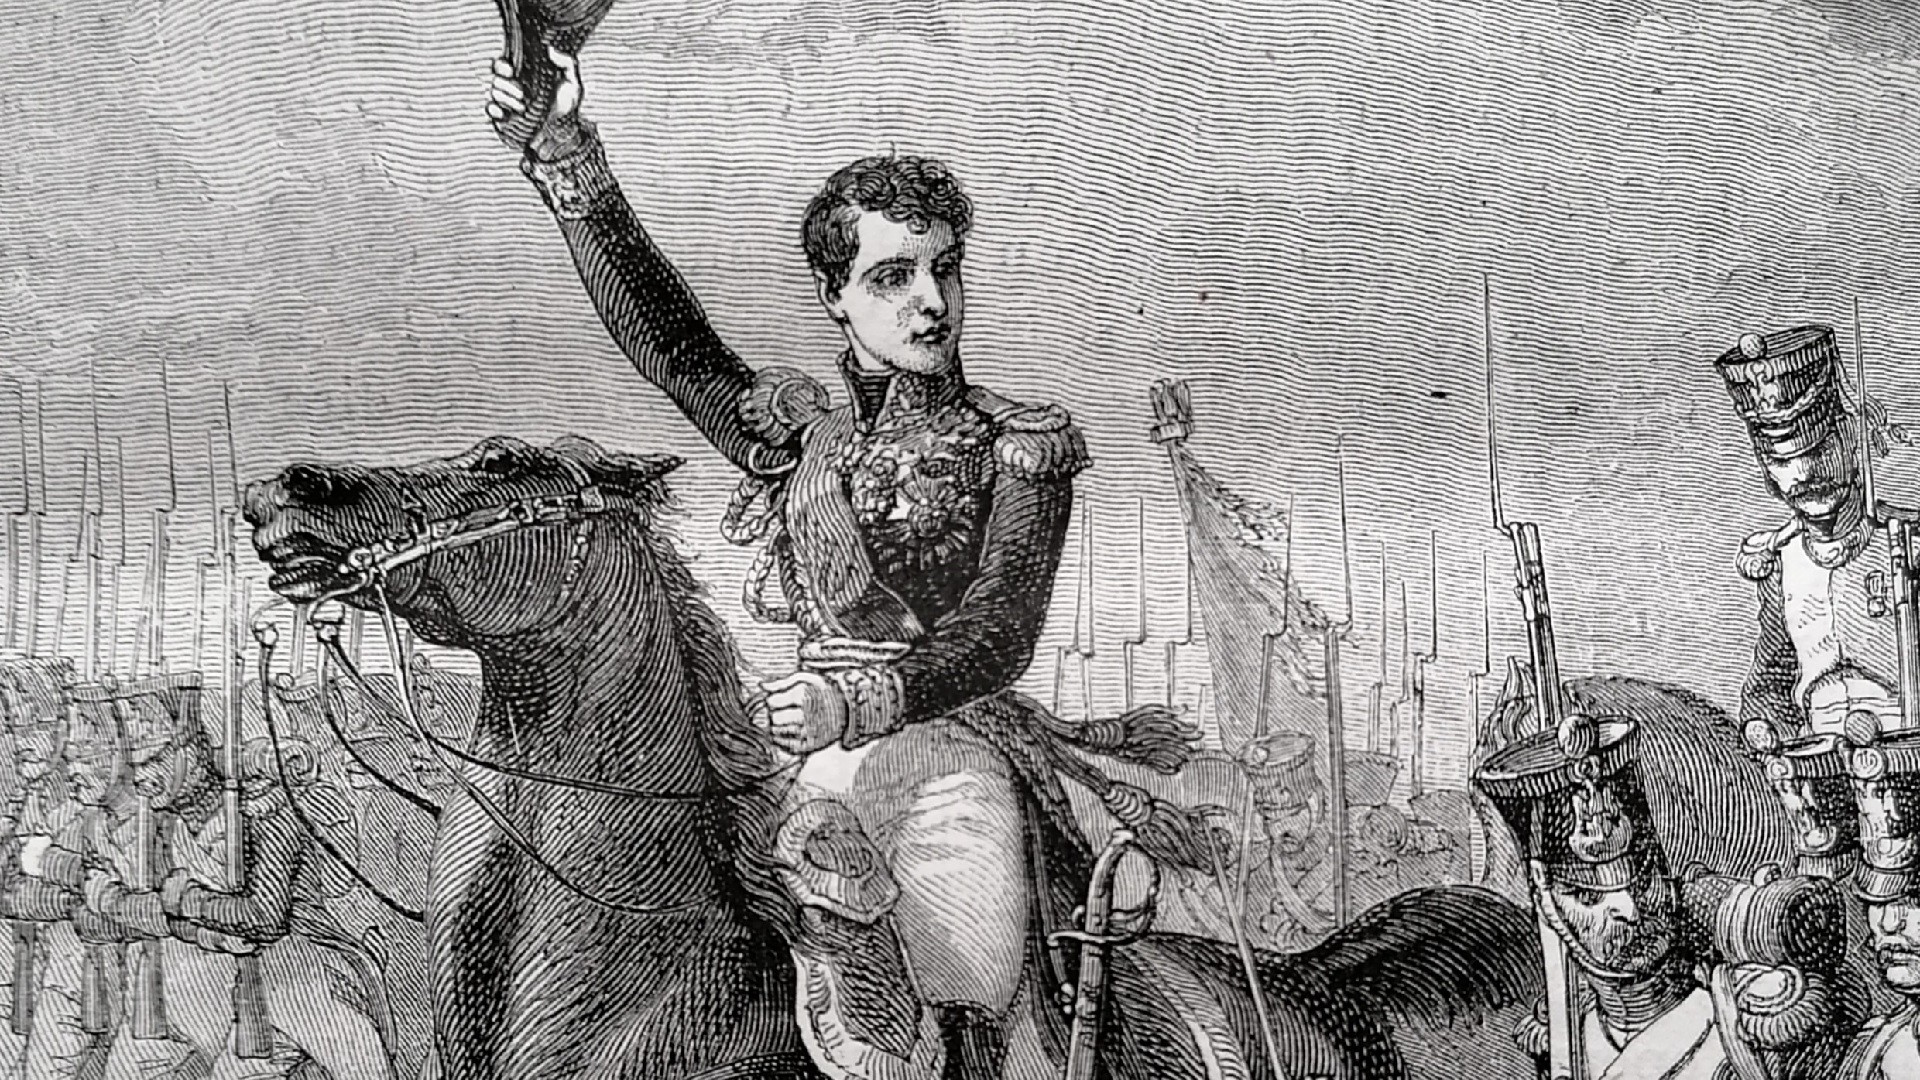 Le général Gudin en campagne. (illustration de 1873)